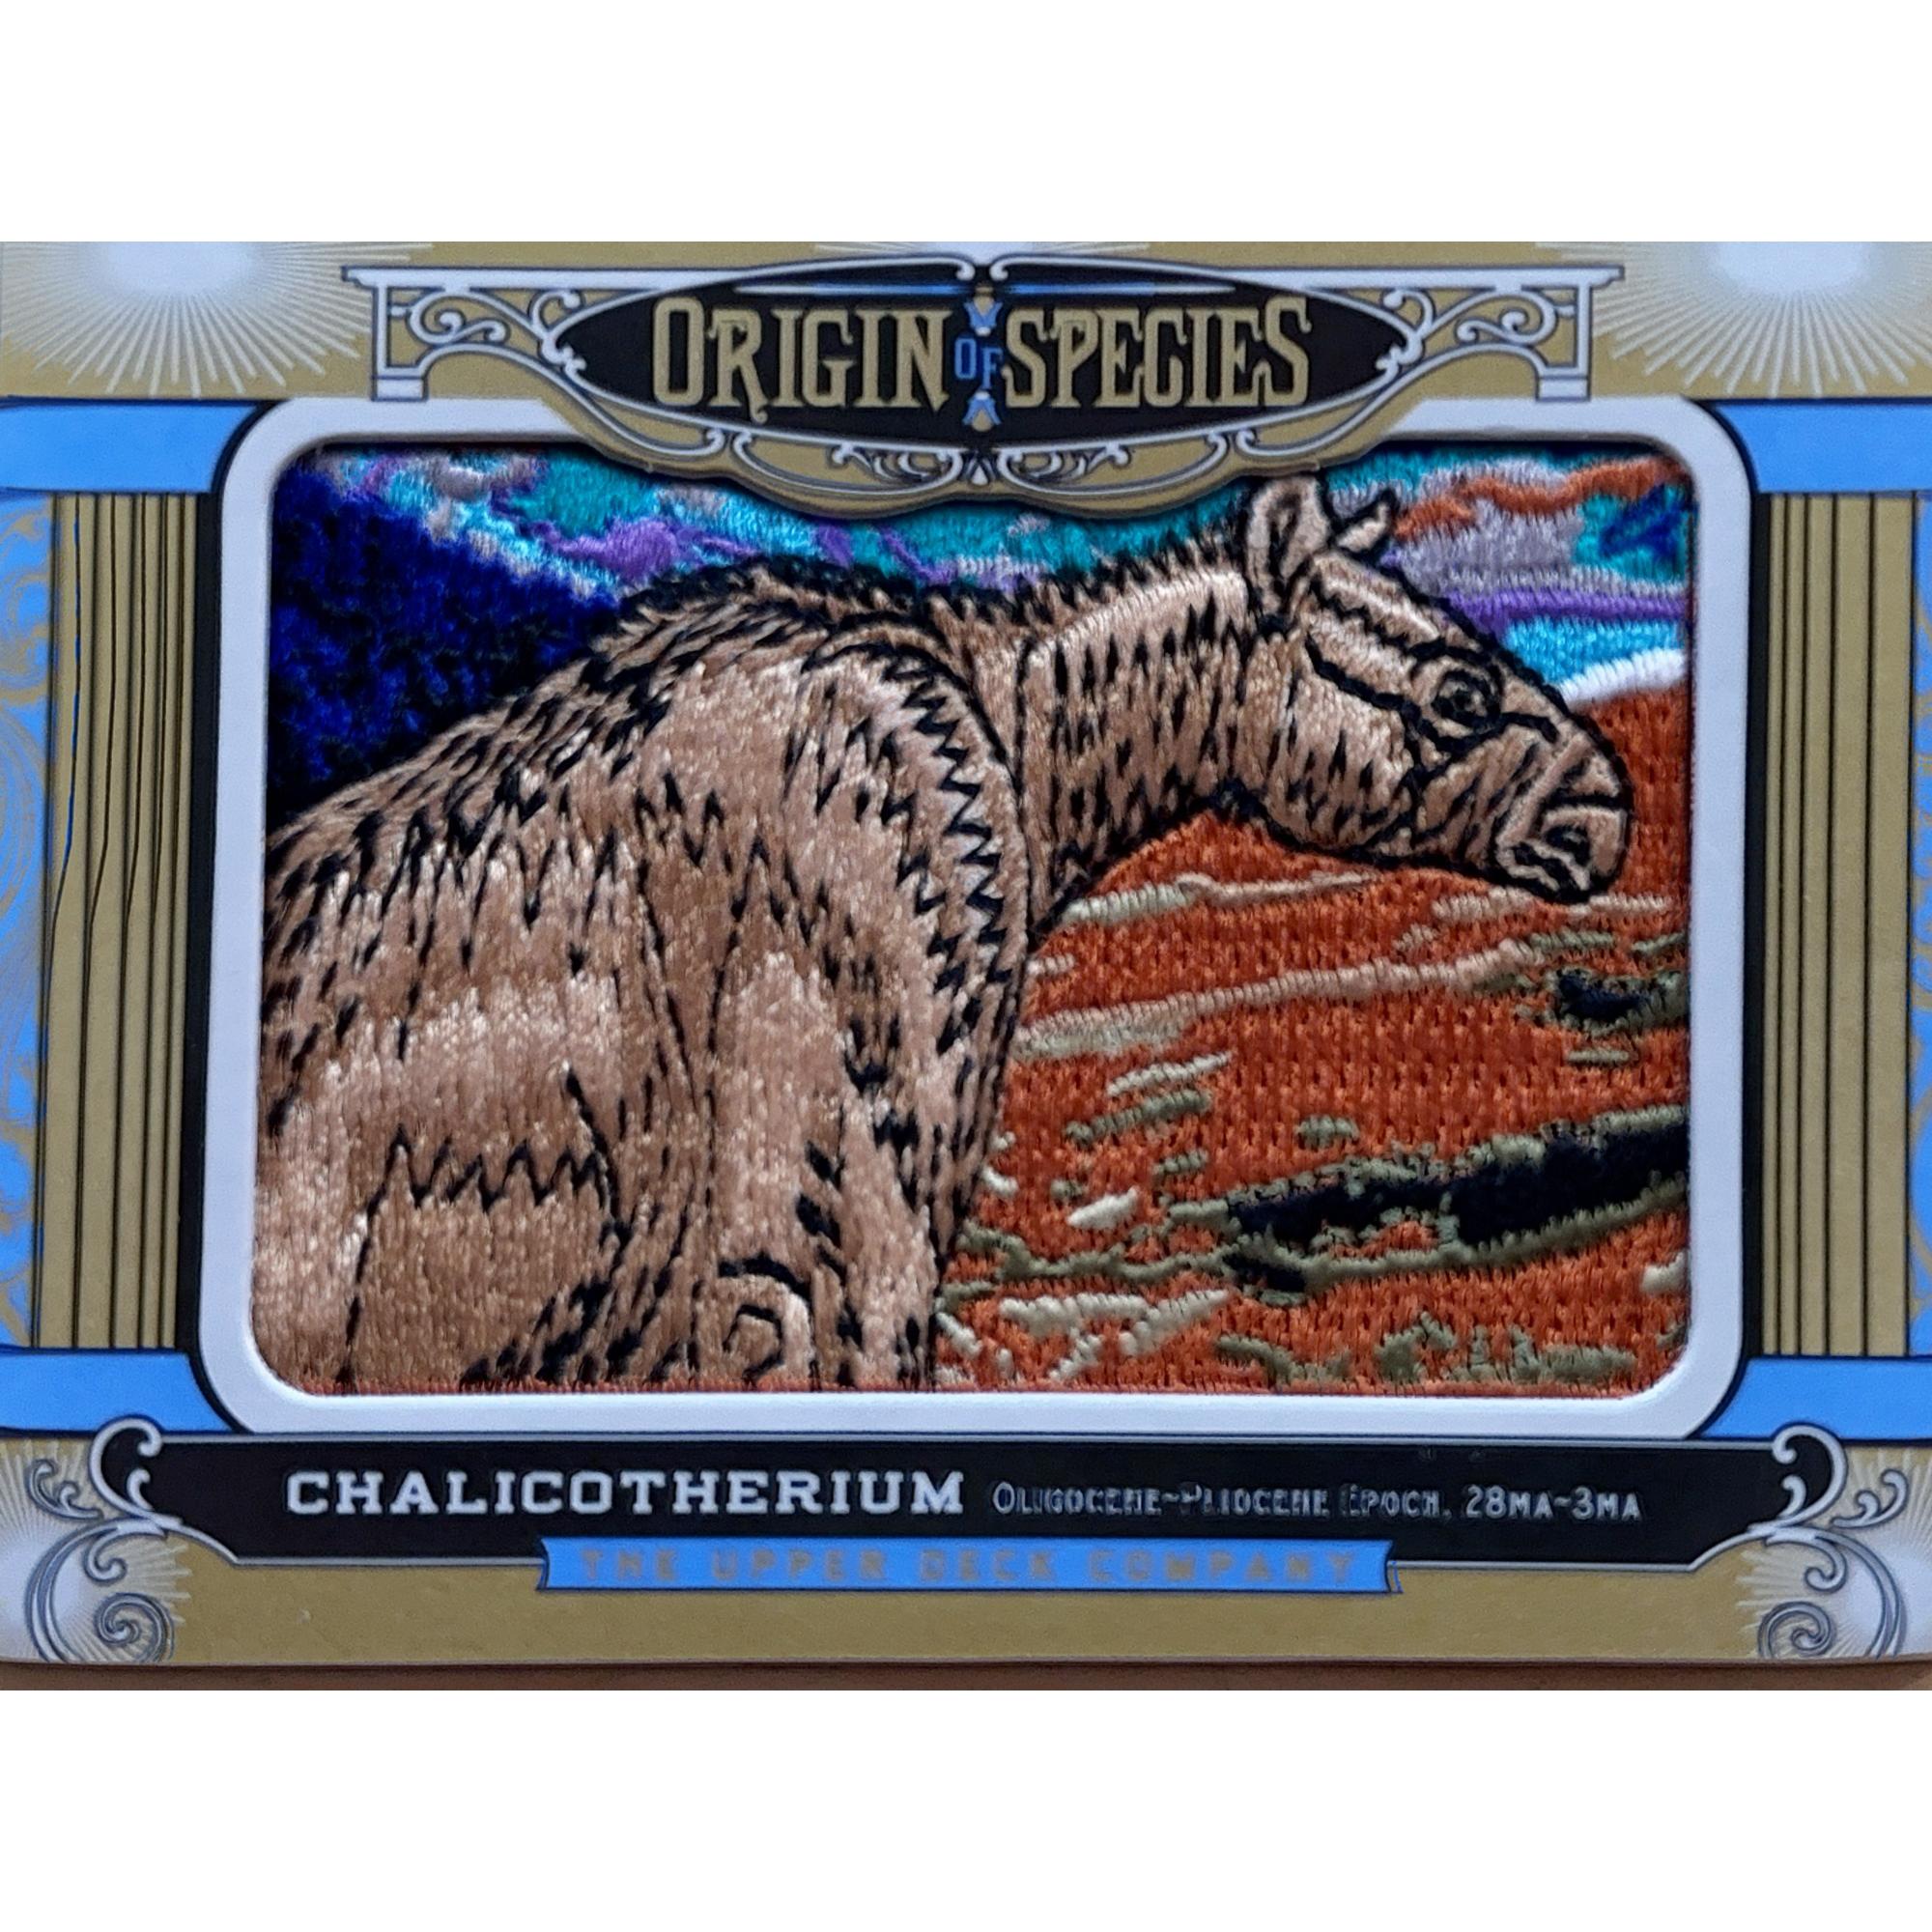 Upper deck, Chalicotherium patch Prehistoric Online